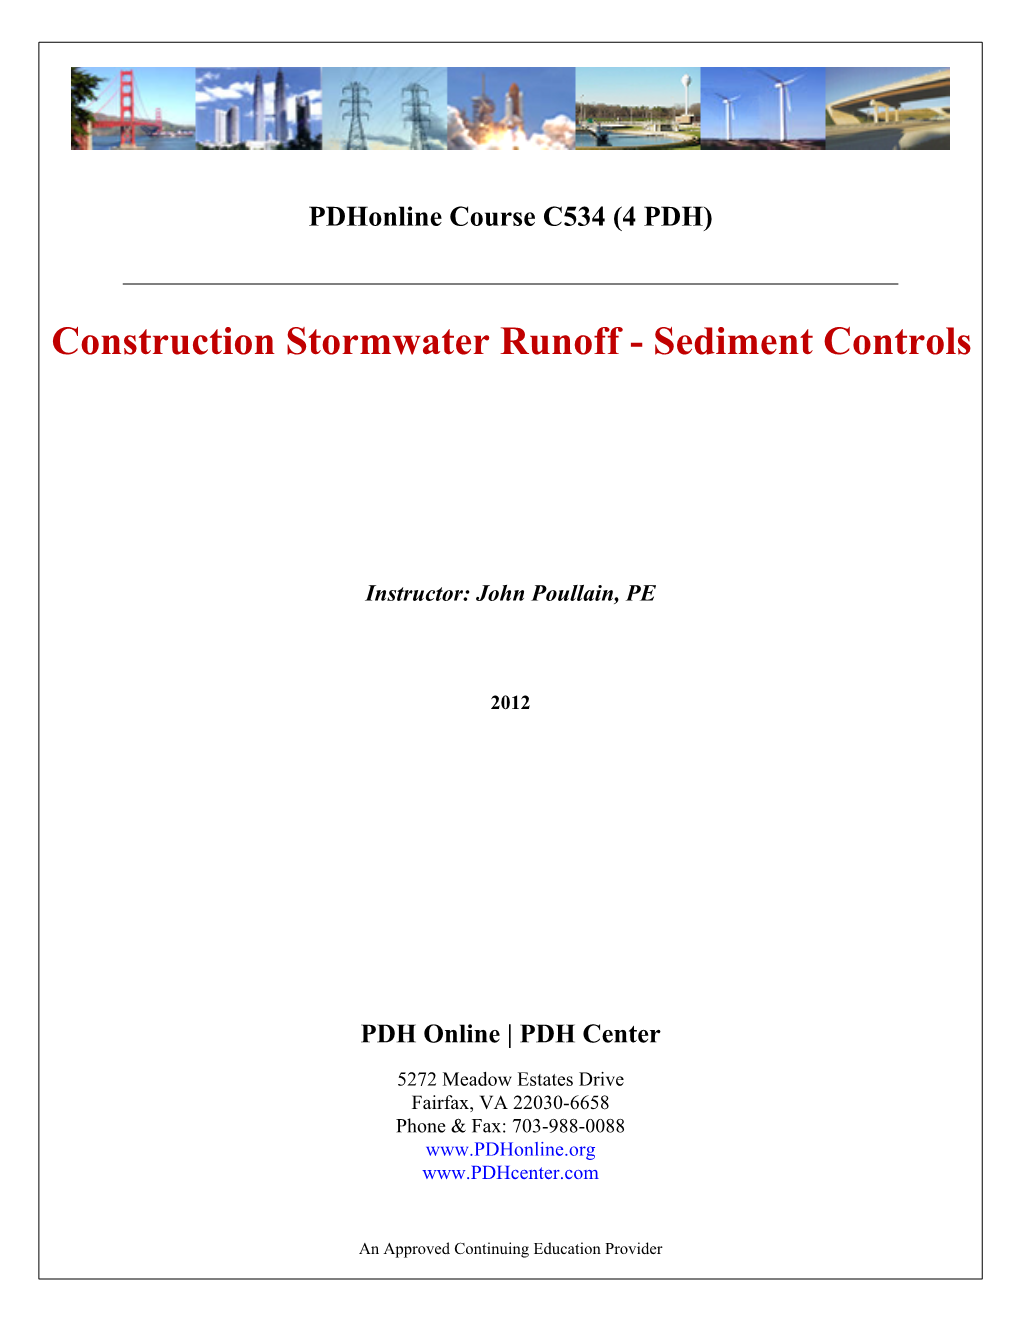 Construction Stormwater Runoff - Sediment Controls